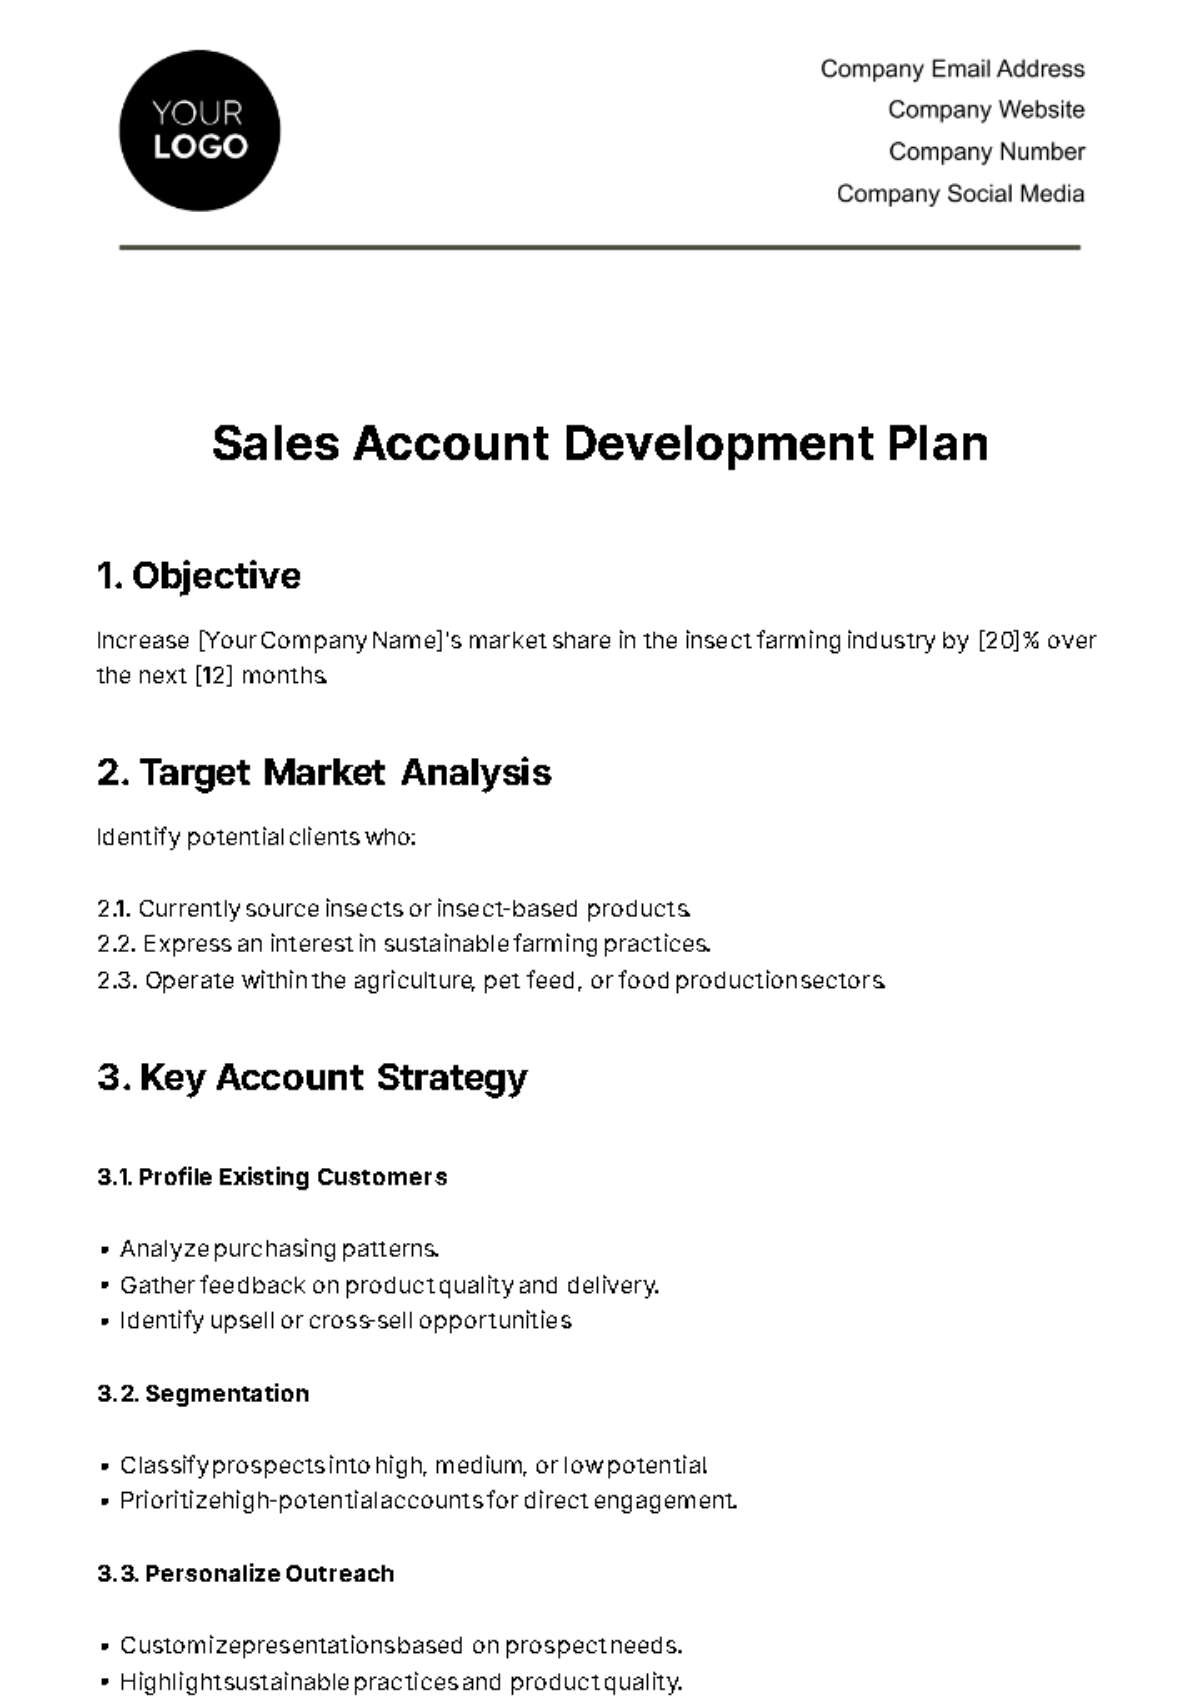 Free Sales Account Development Plan Template